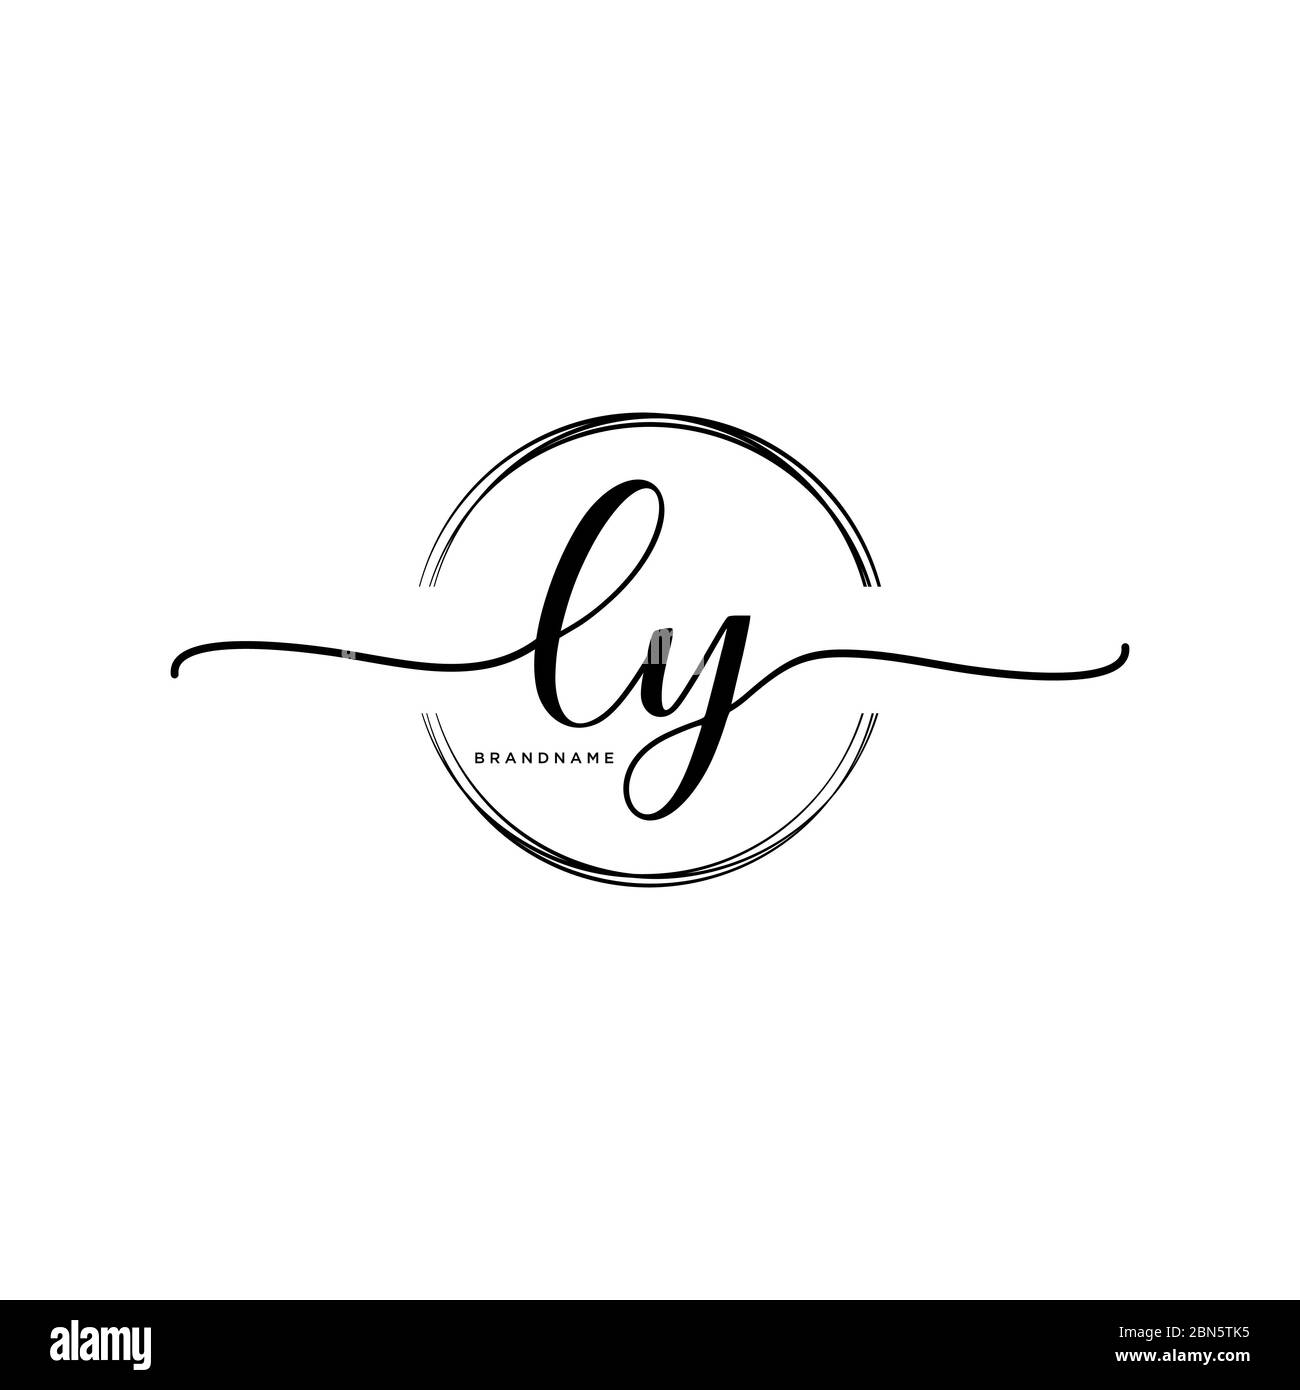 Yl Initial Handwriting Logo Circle Template Stock Vector (Royalty Free)  1217191474